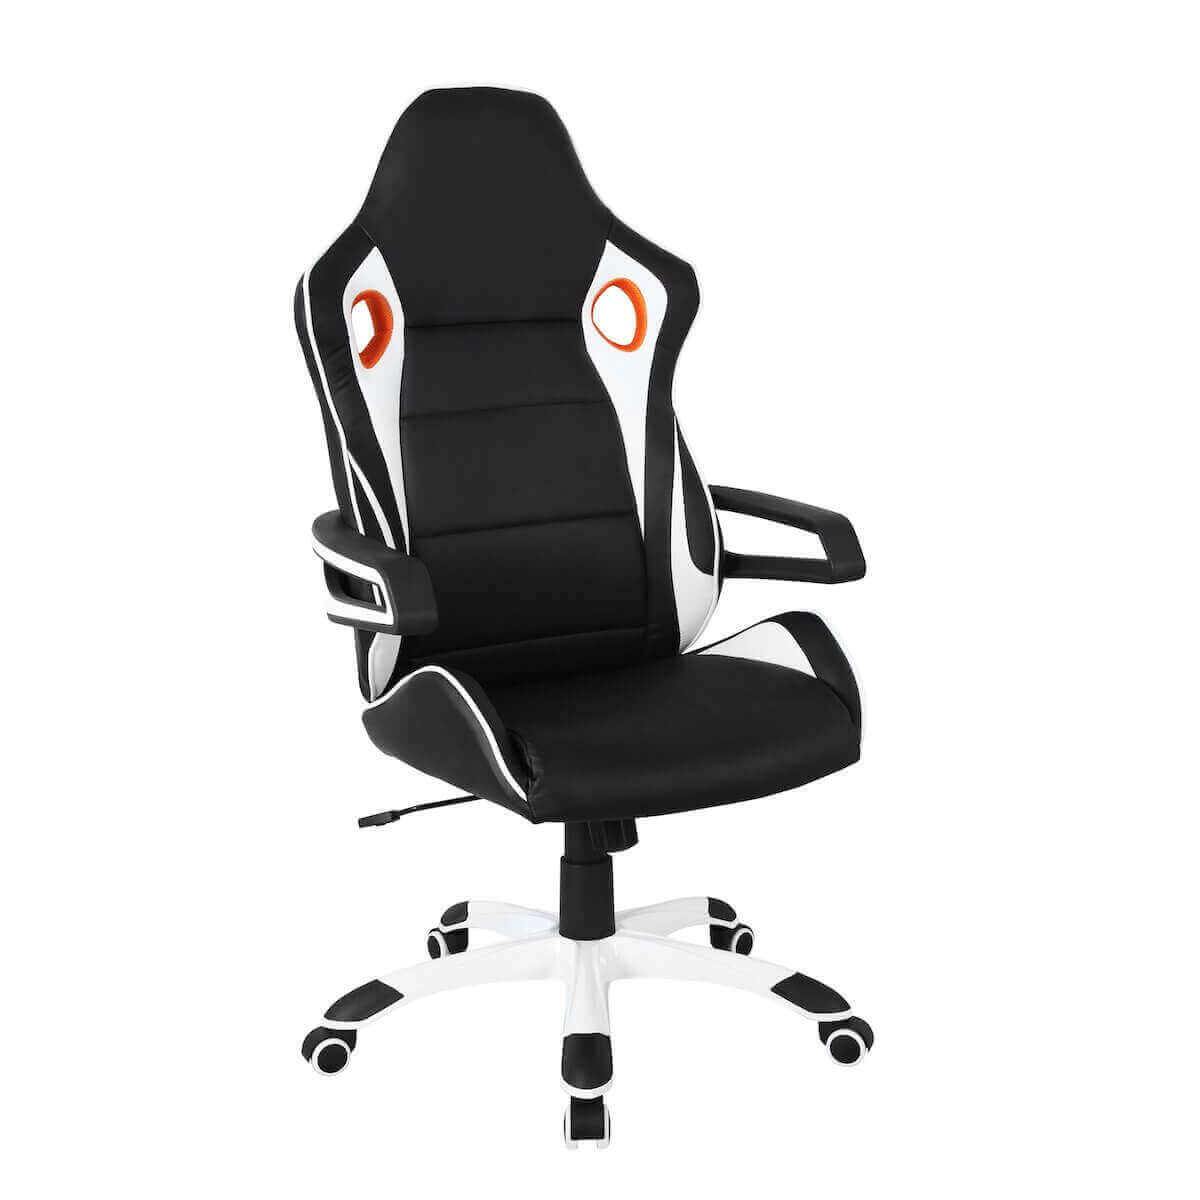 Techni Mobili Black Racing Style Home & Office Chair RTA-2022-BK Angle